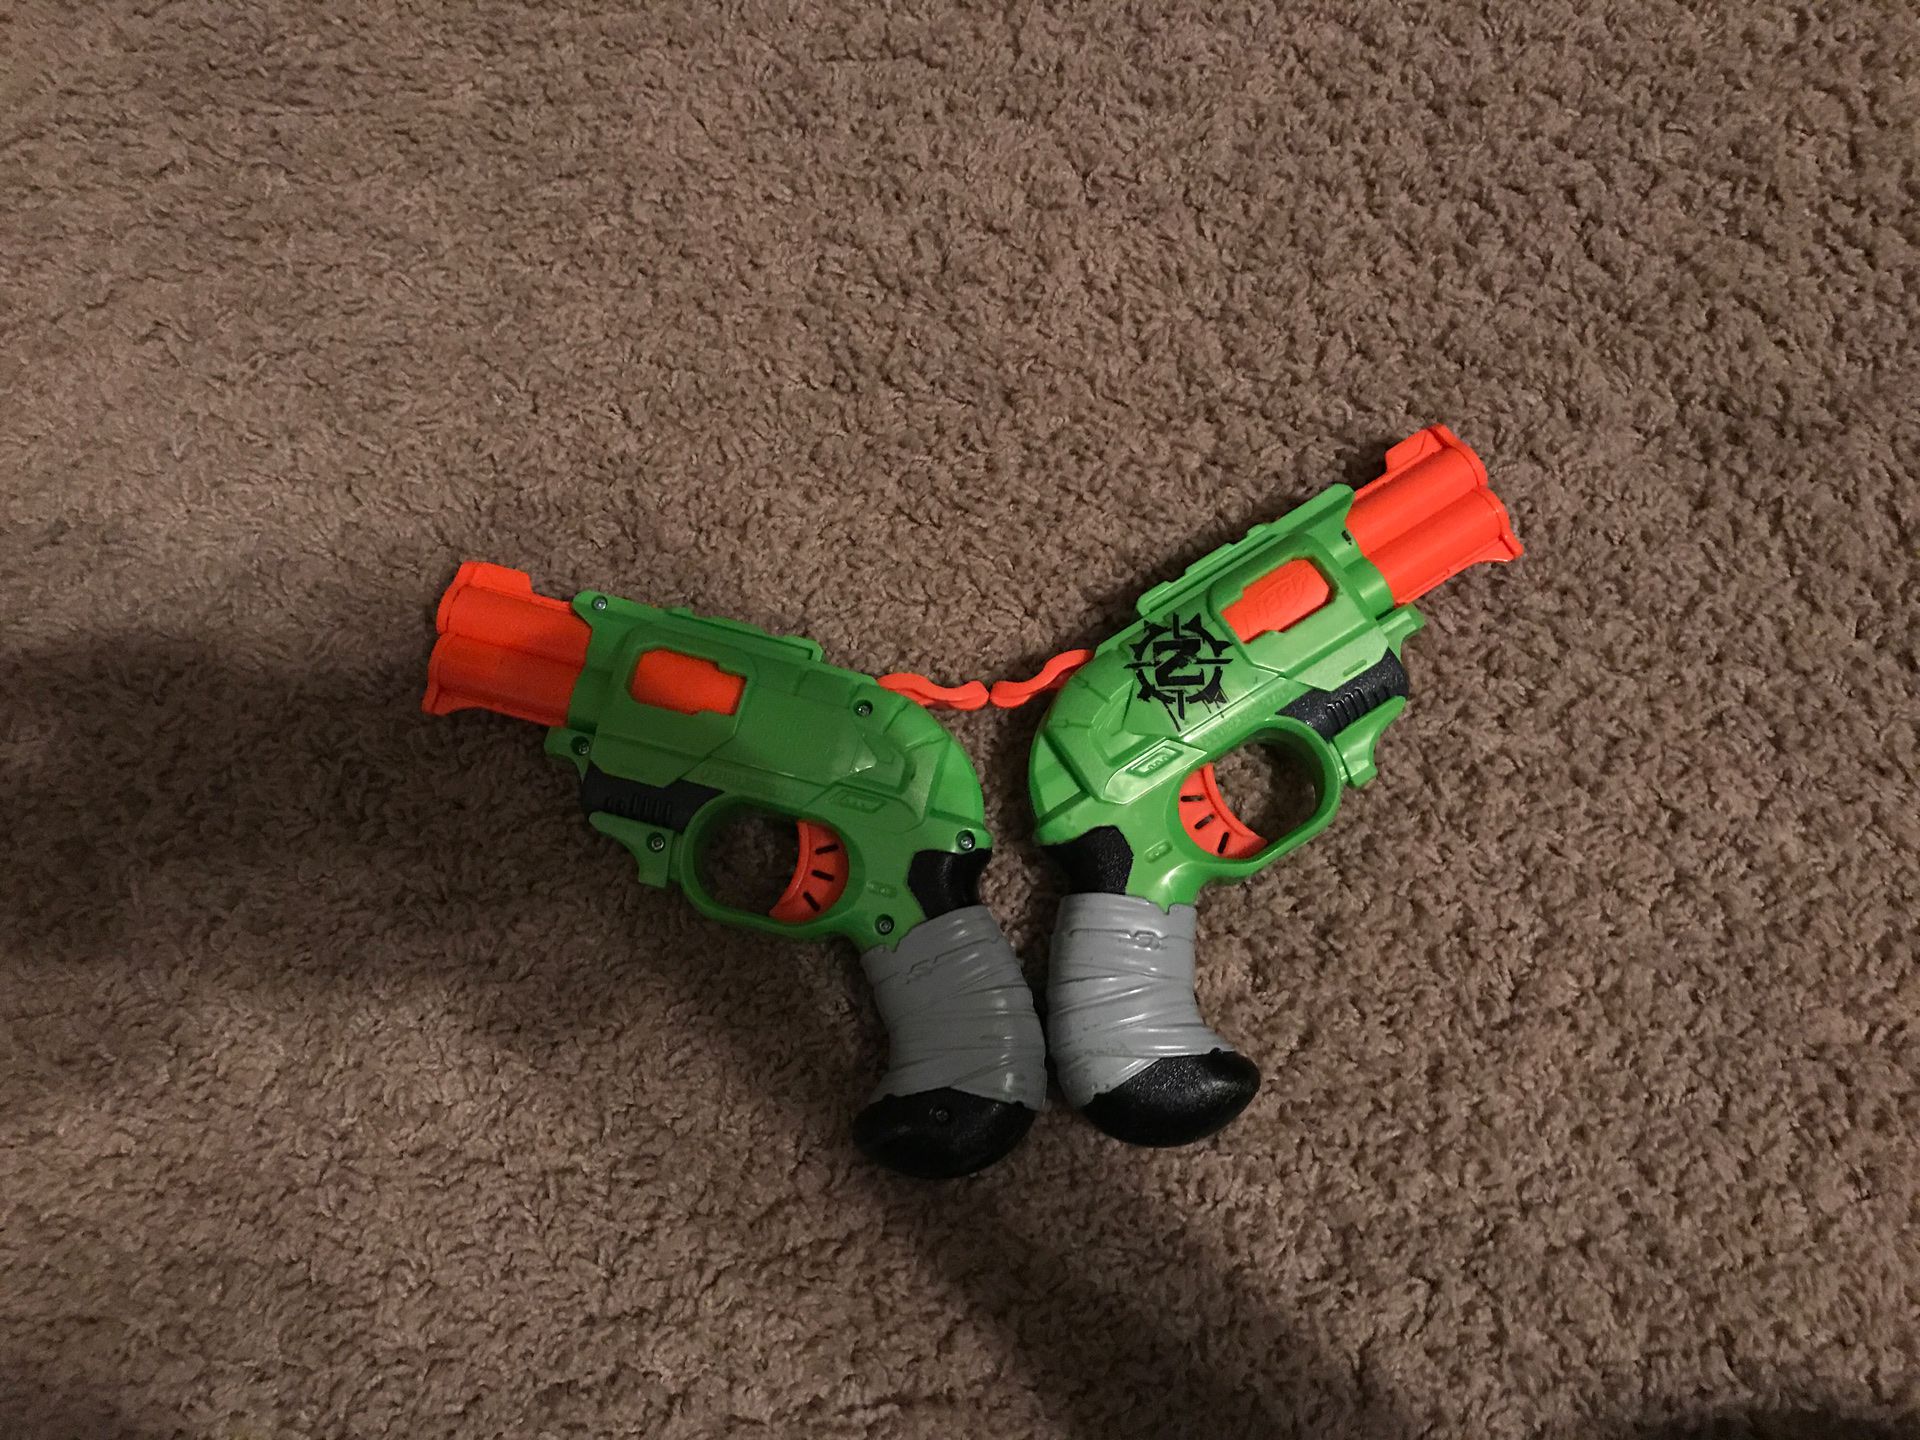 Zombie Edition Nerf Guns